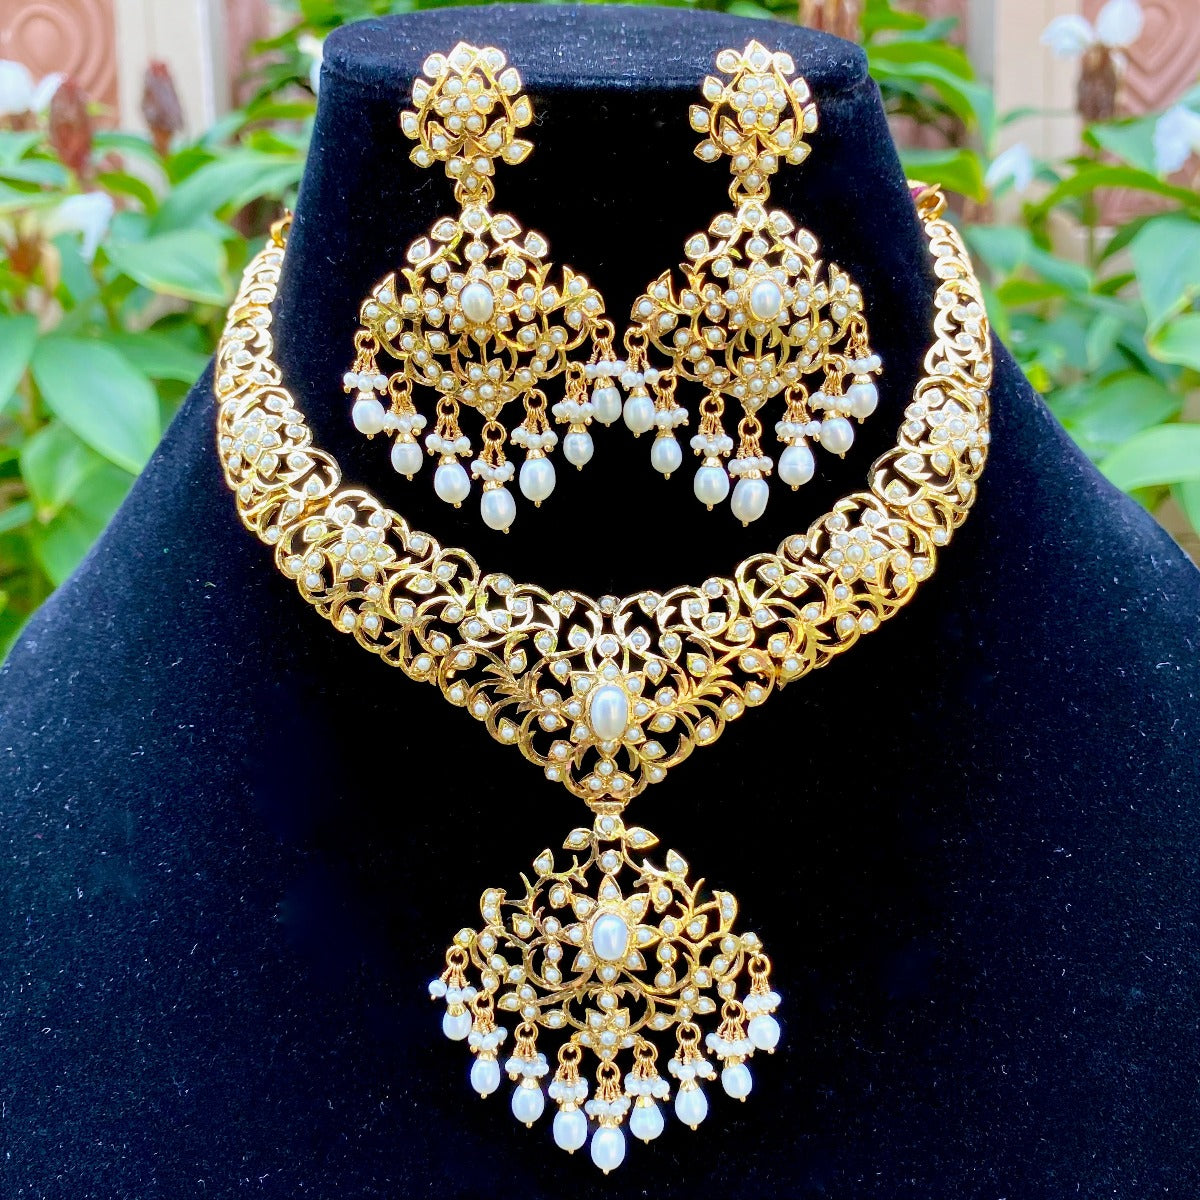 Edwardian Pearl Jewelry | Premium Silver & Seed Pearl Jewelry | For Women